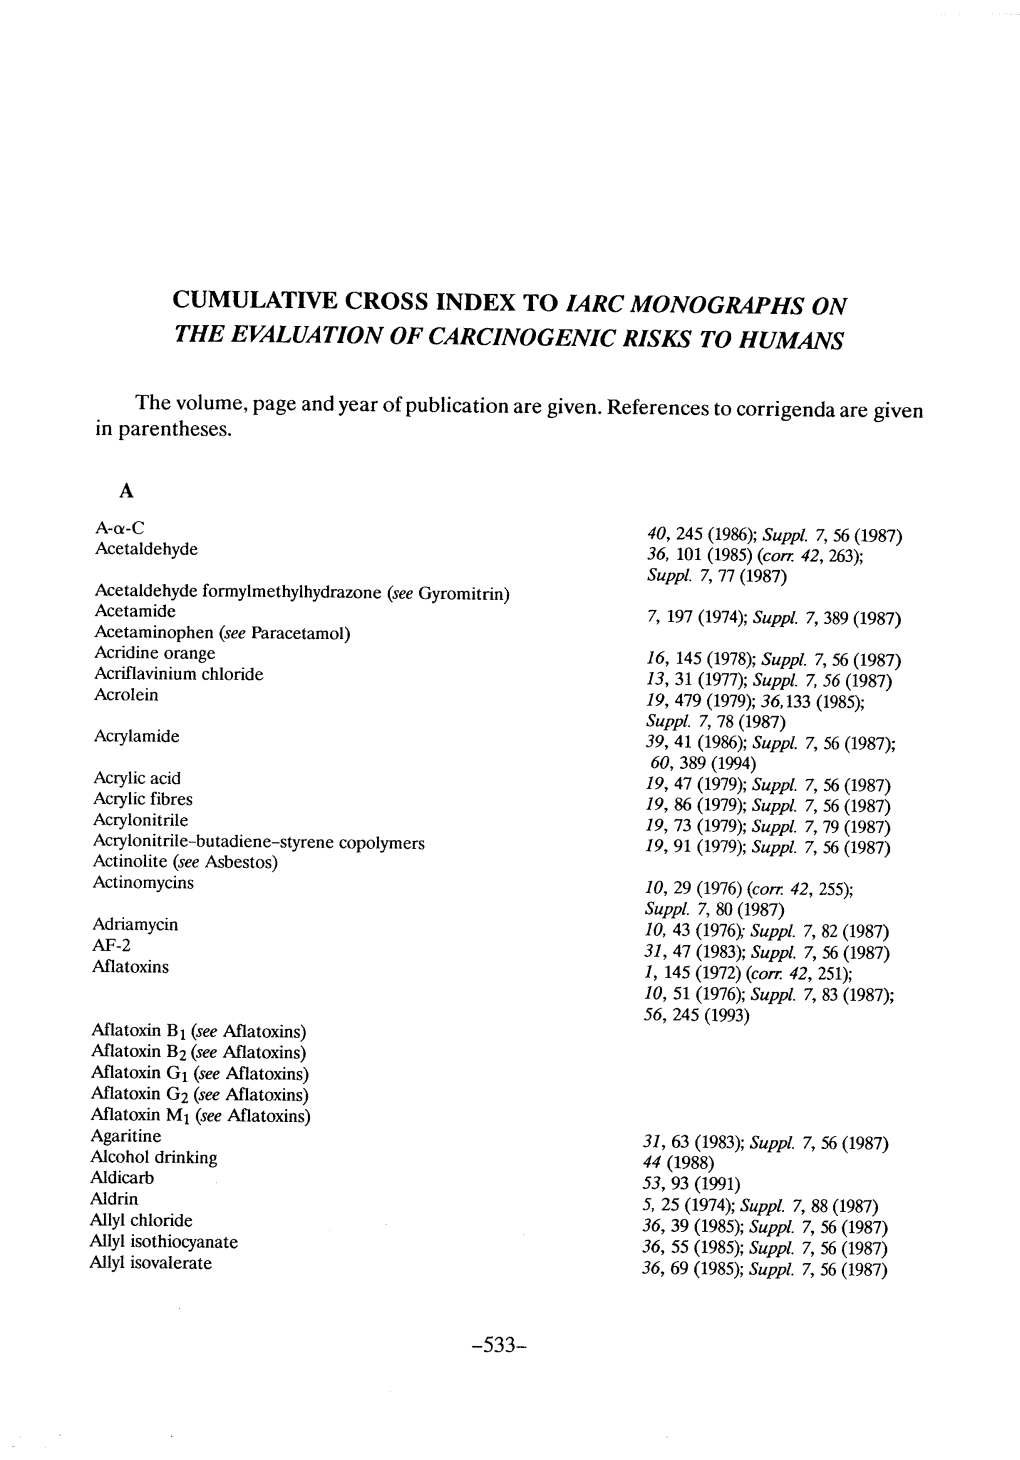 Cumulative Cross Index to IARC Monographs